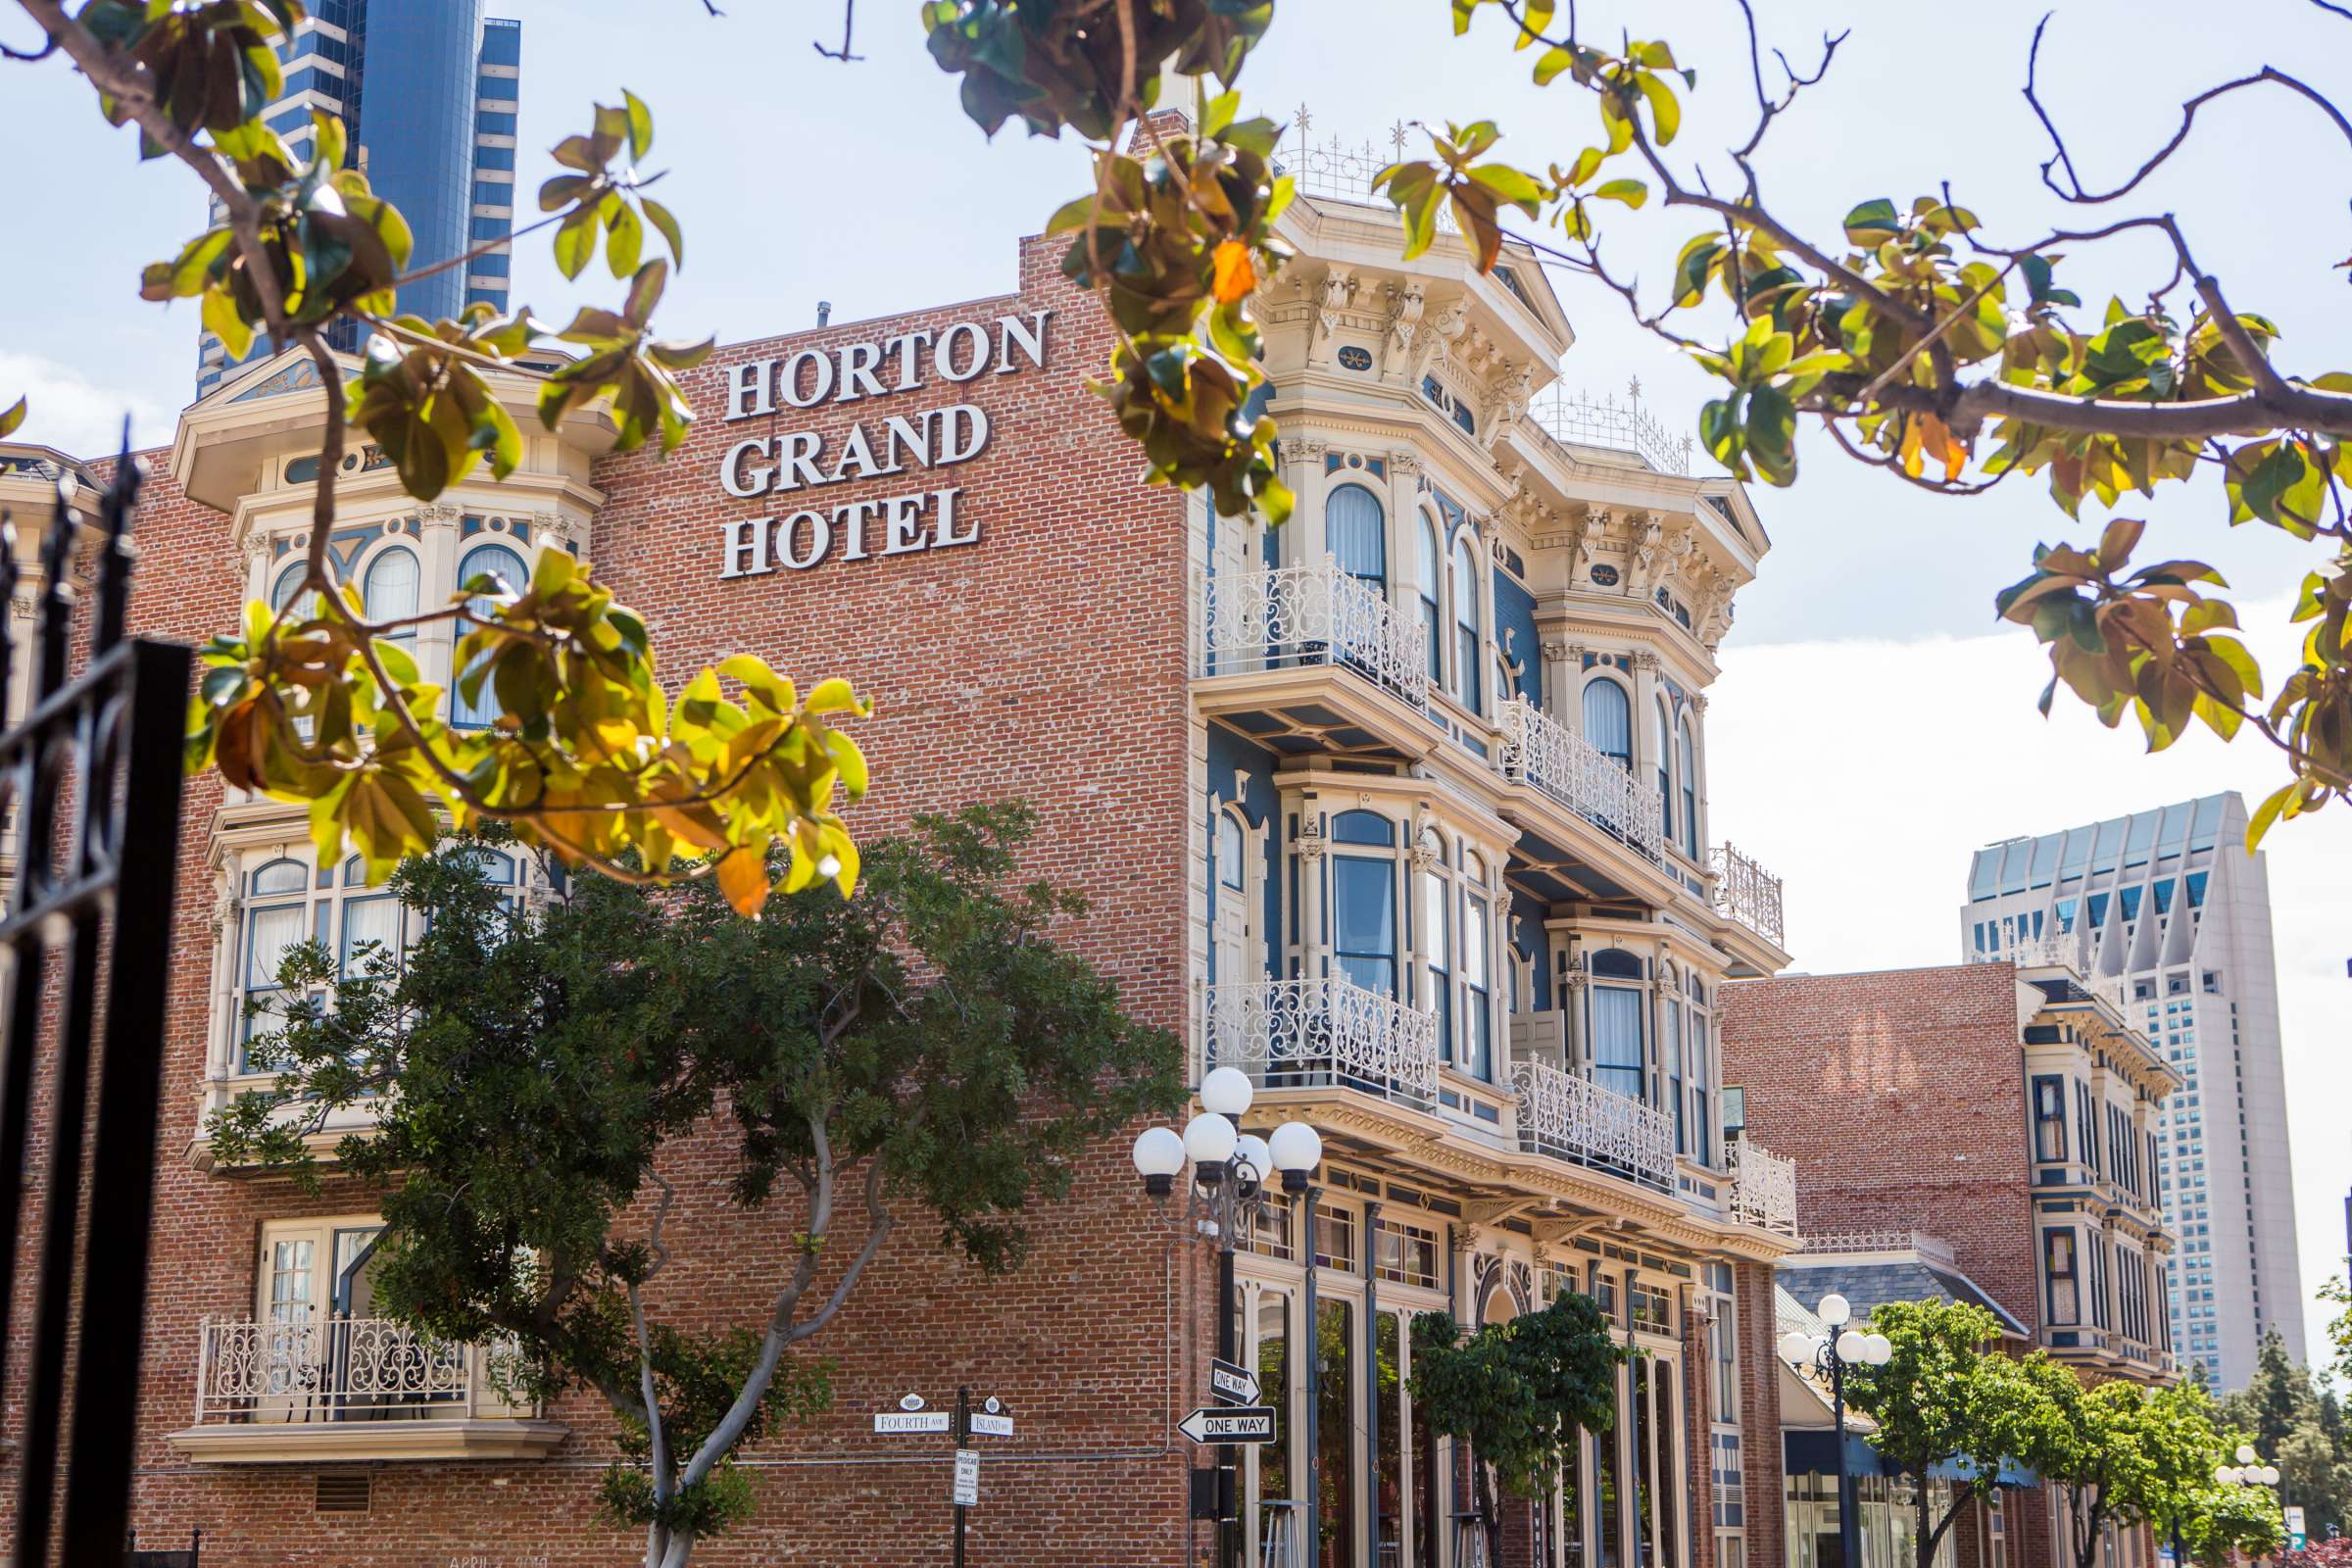 Horton Grand Hotel San Diego Photographer True Photography - 